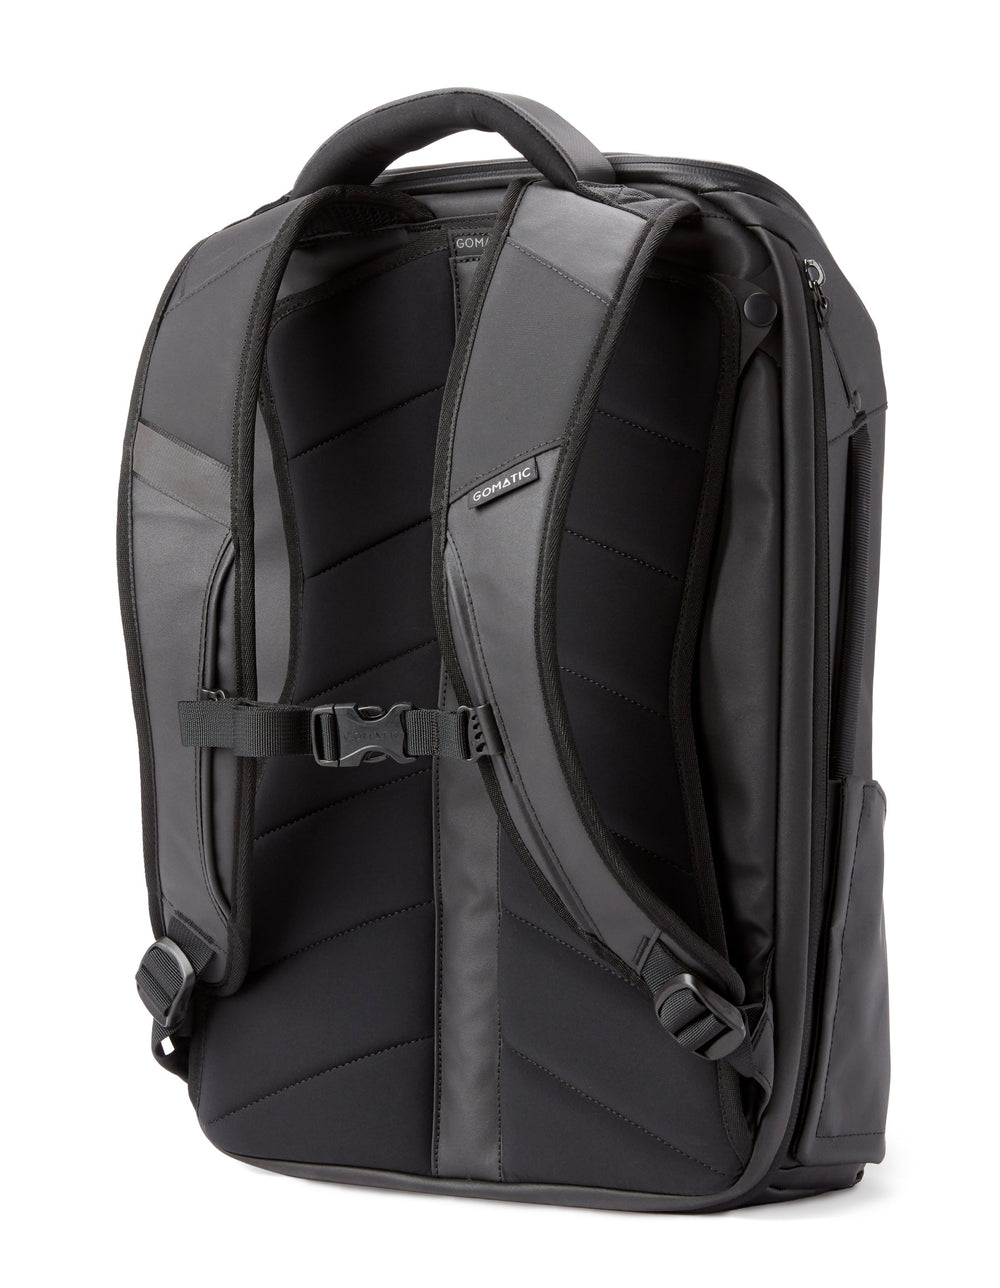 Backpack - GOMATIC Travel Bags Packs